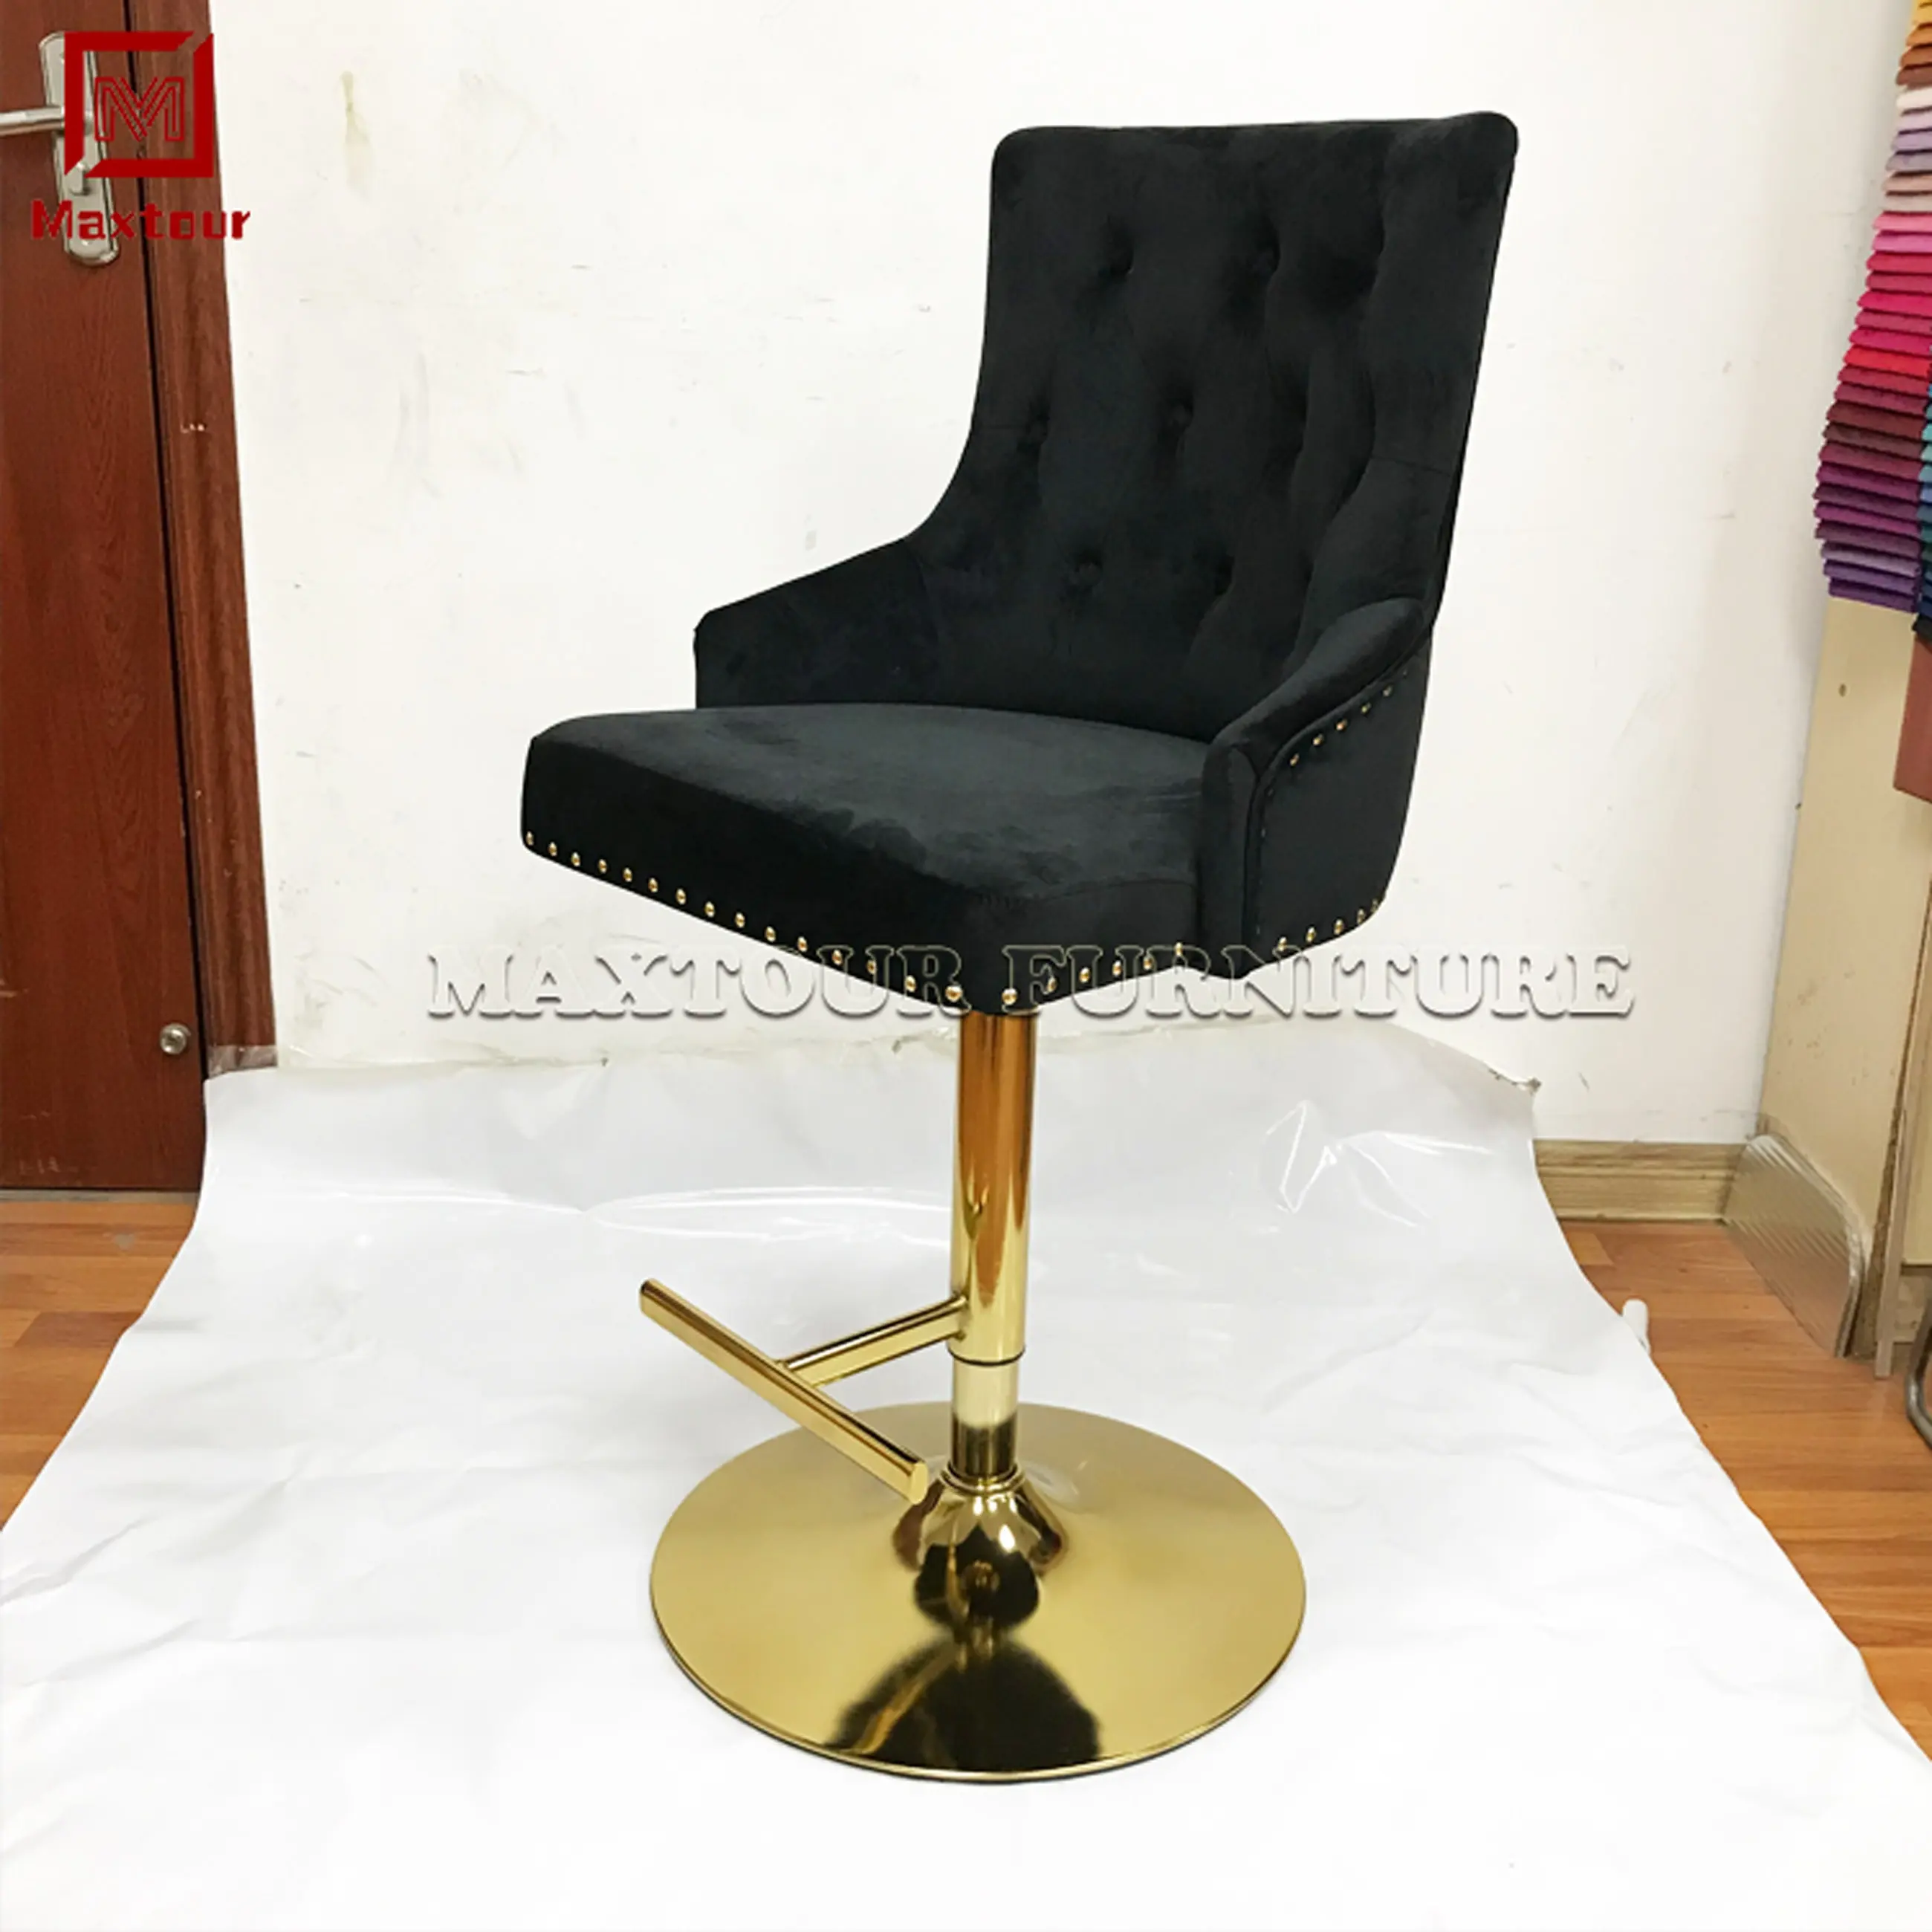 Mid Century Chromed Swivel Adjustable Bar Stools Tufted Upholstered Bar Chairs Made of Velvet Fabric for Basement Use